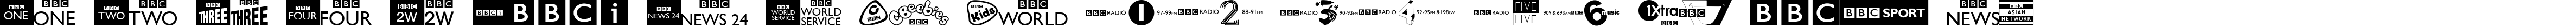 Пример написания английского алфавита шрифтом BBC TV Channel Logos